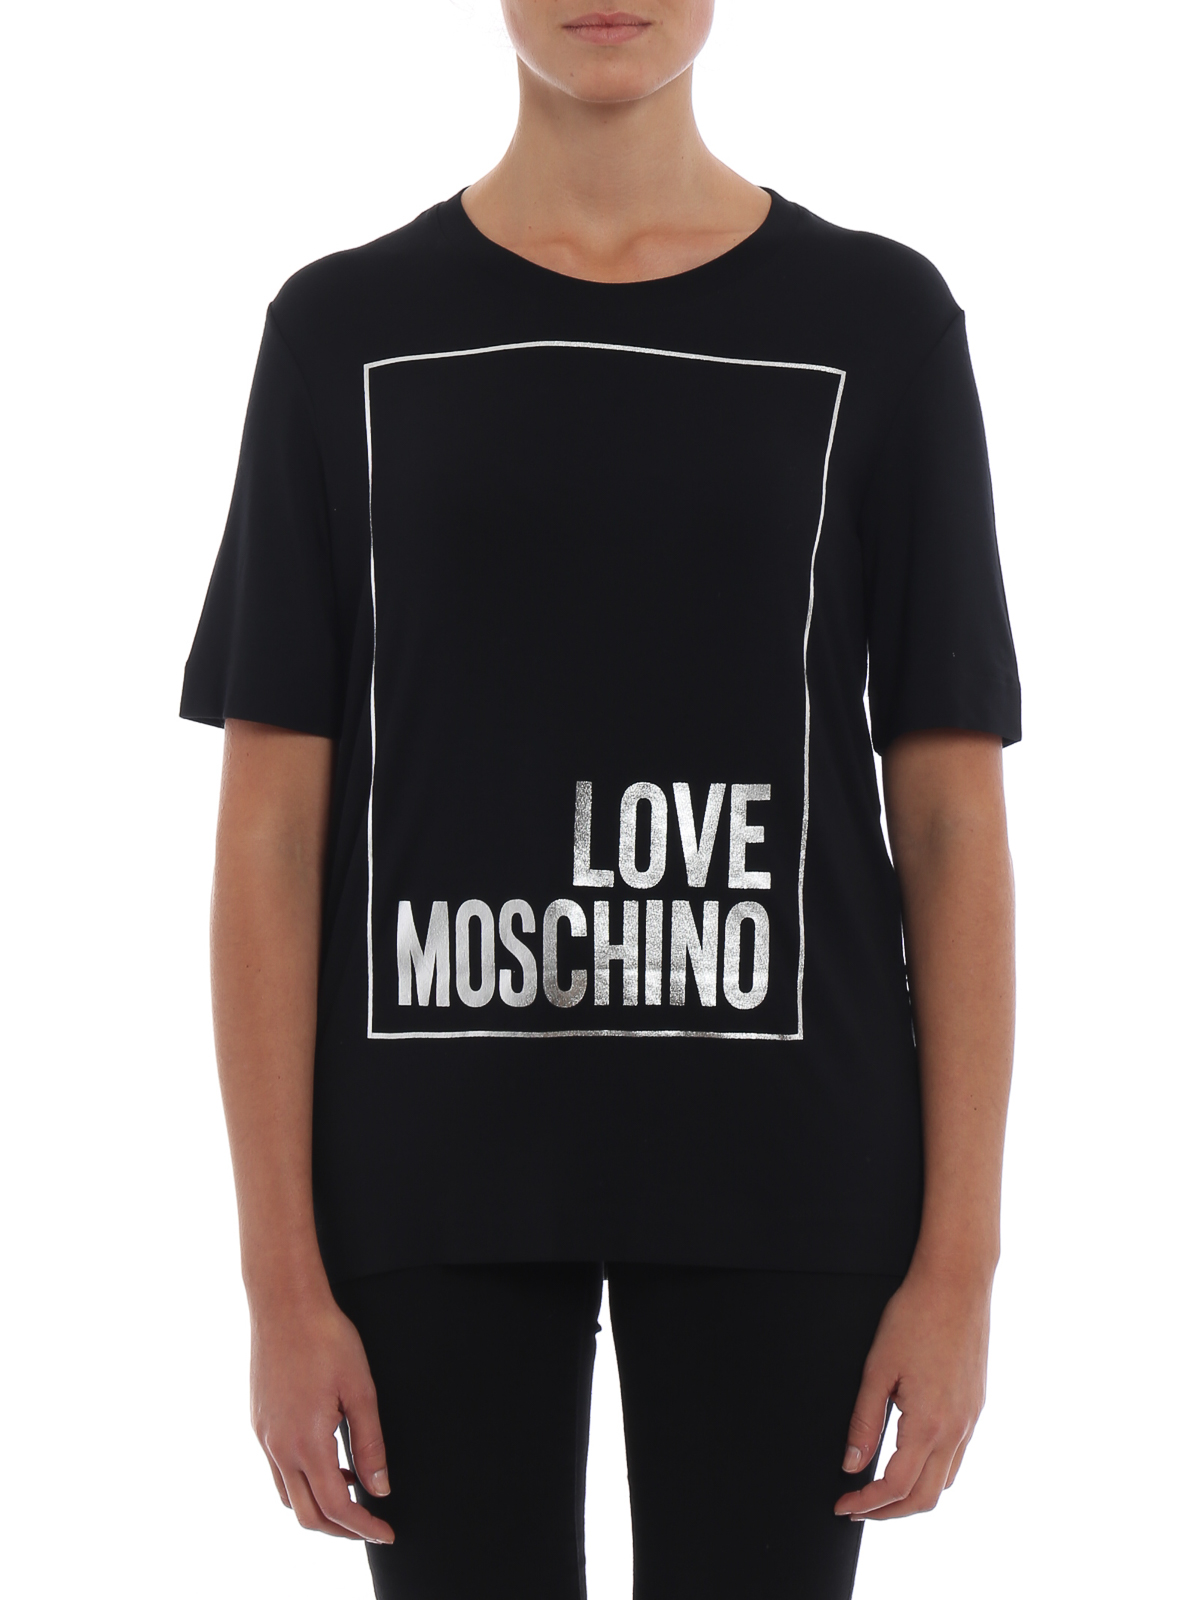 Love moschino Tシャツ